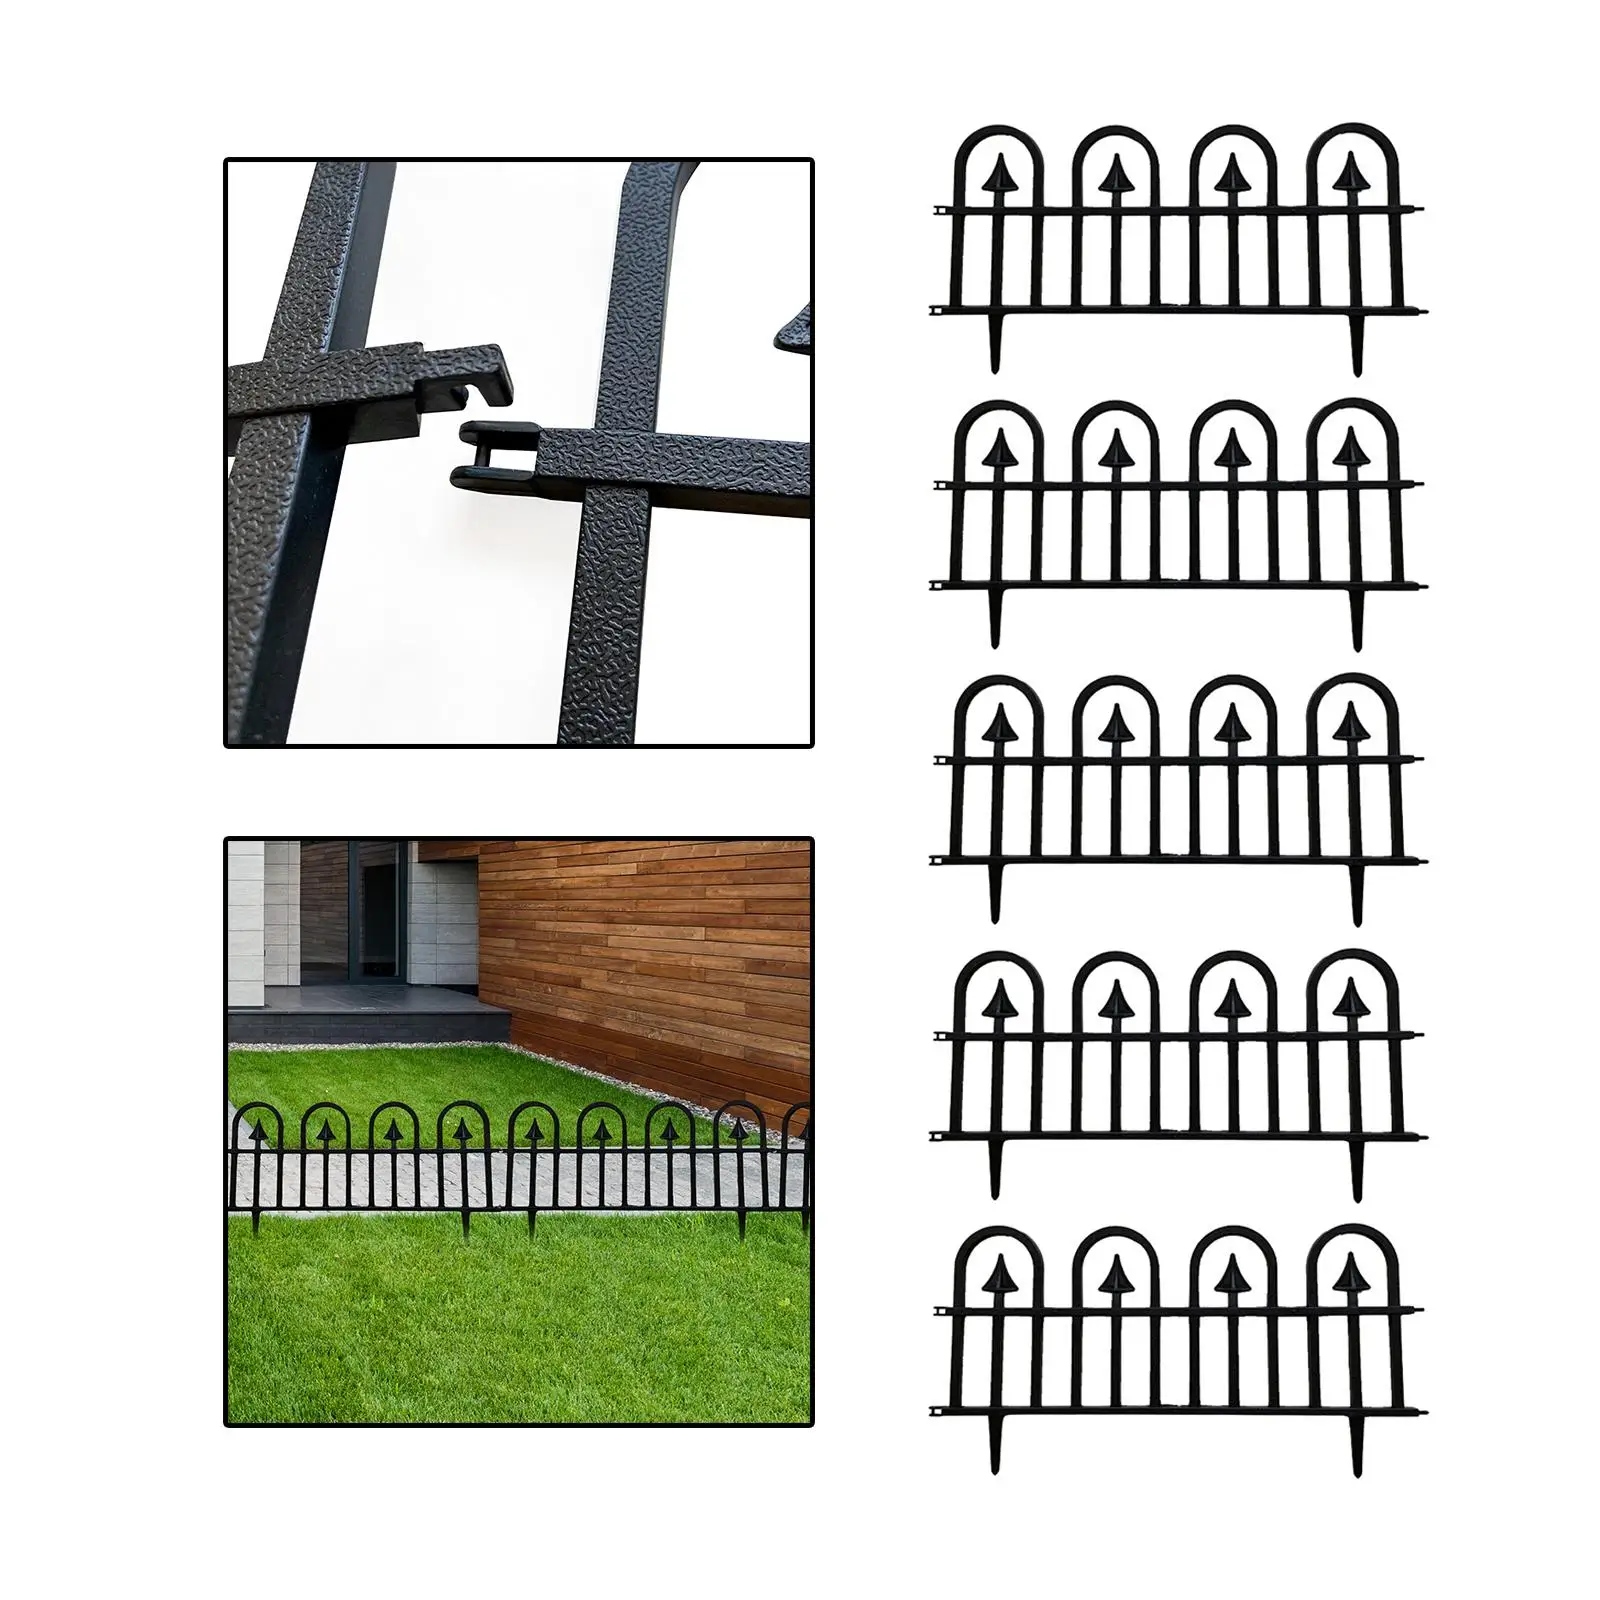 5 Pieces Garden Edging Border Fence Border Garden Fencing Fence Liner for Flower Lawn Edge